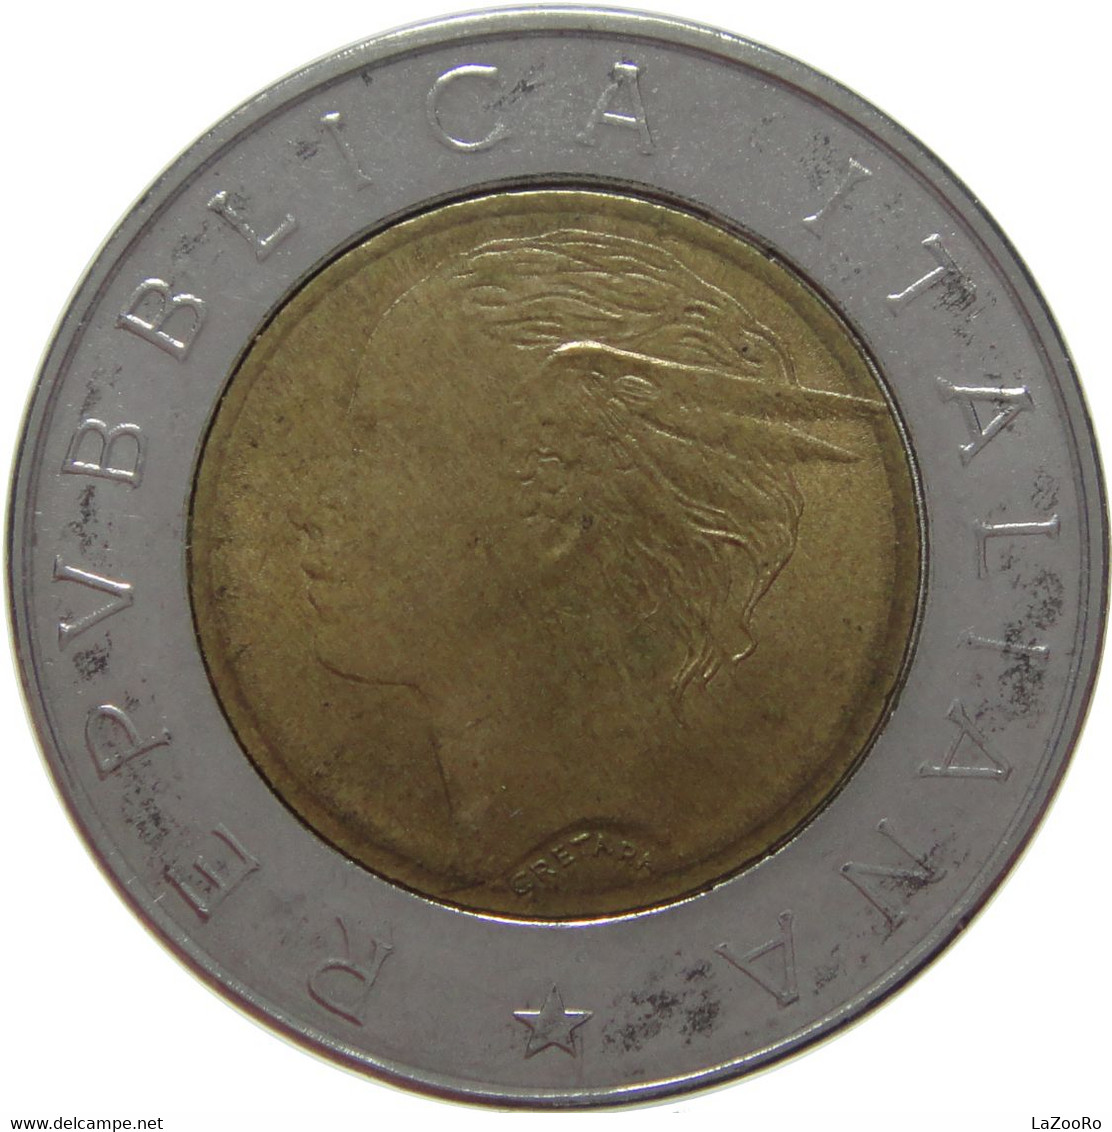 LaZooRo: Italy 500 Lire 1993 XF / UNC Bank Of Italy - Commemorative